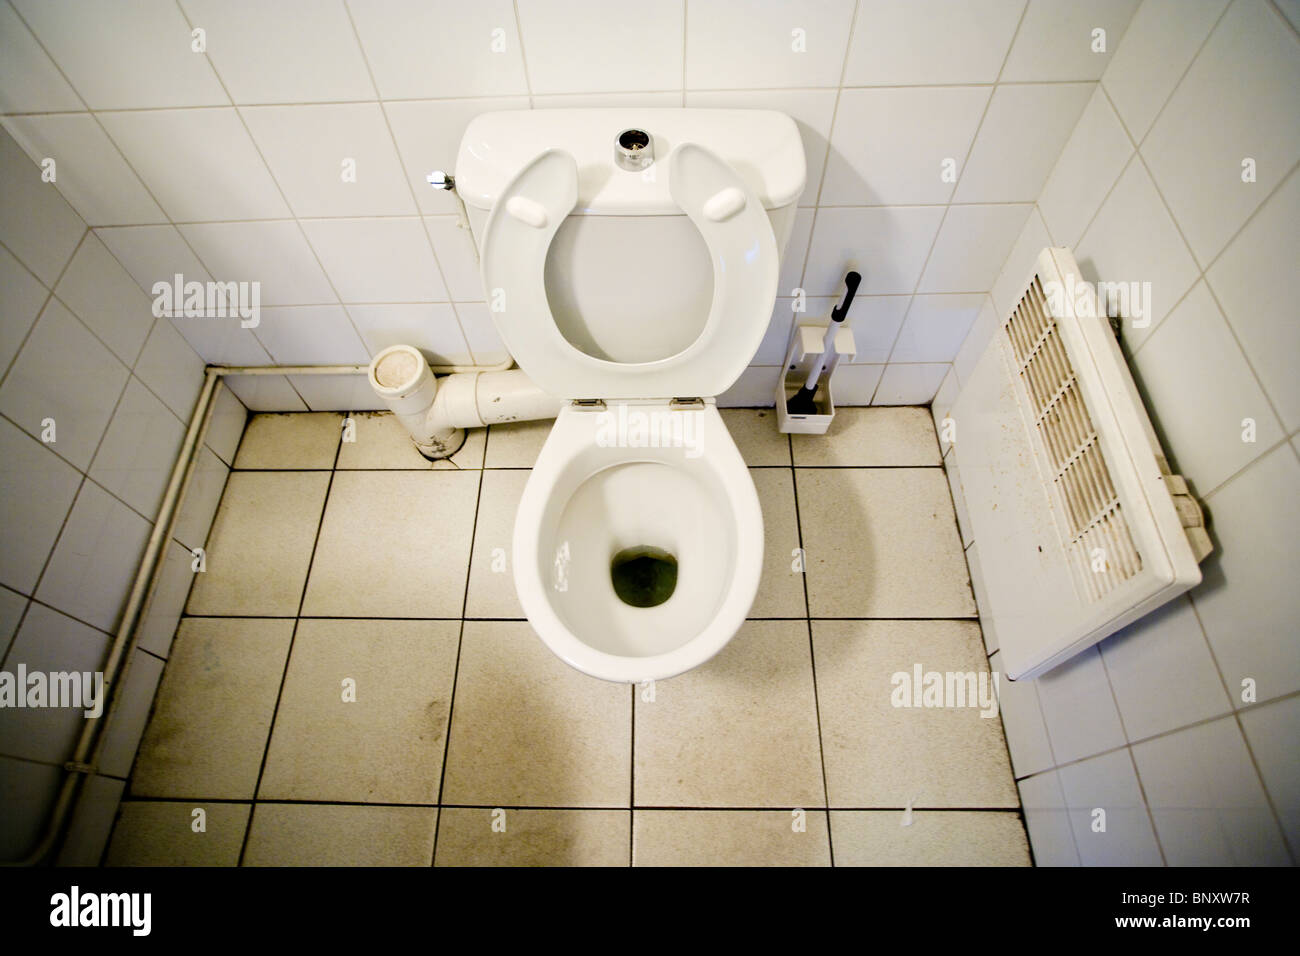 Toilet with seat raised Stock Photo